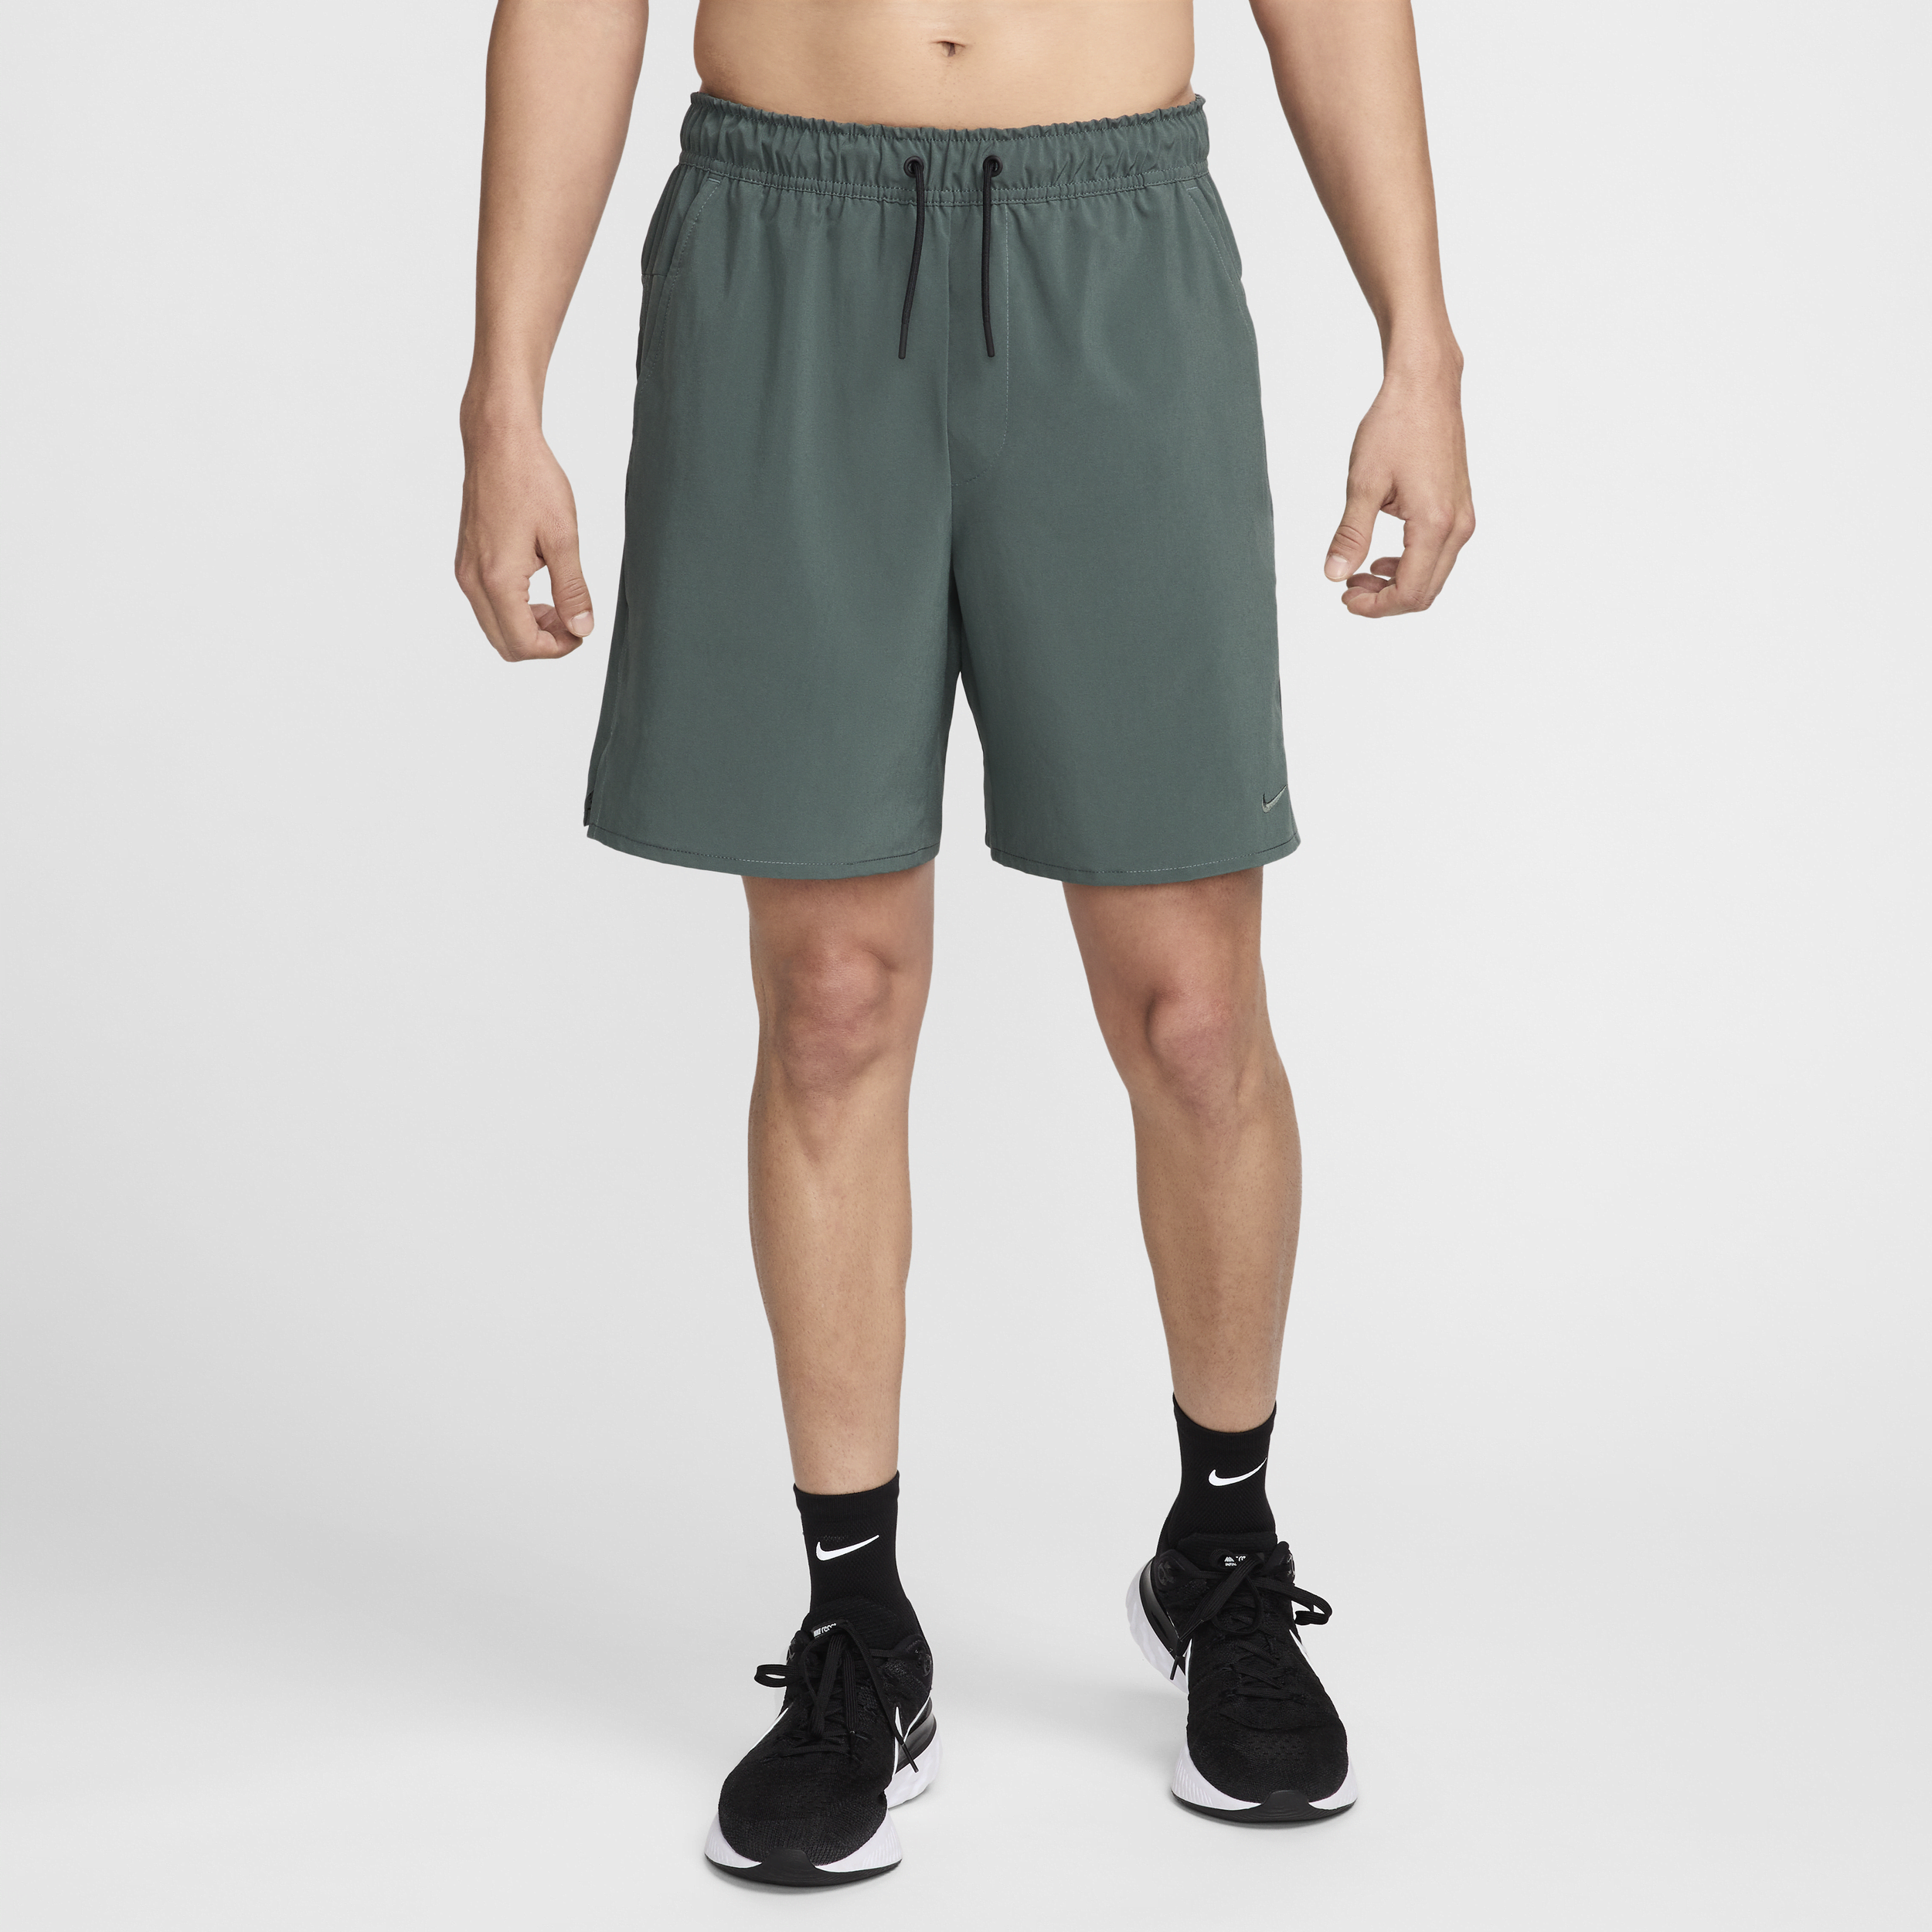 Shorts versatili Dri-FIT non foderati 18 cm Nike Unlimited – Uomo - Verde